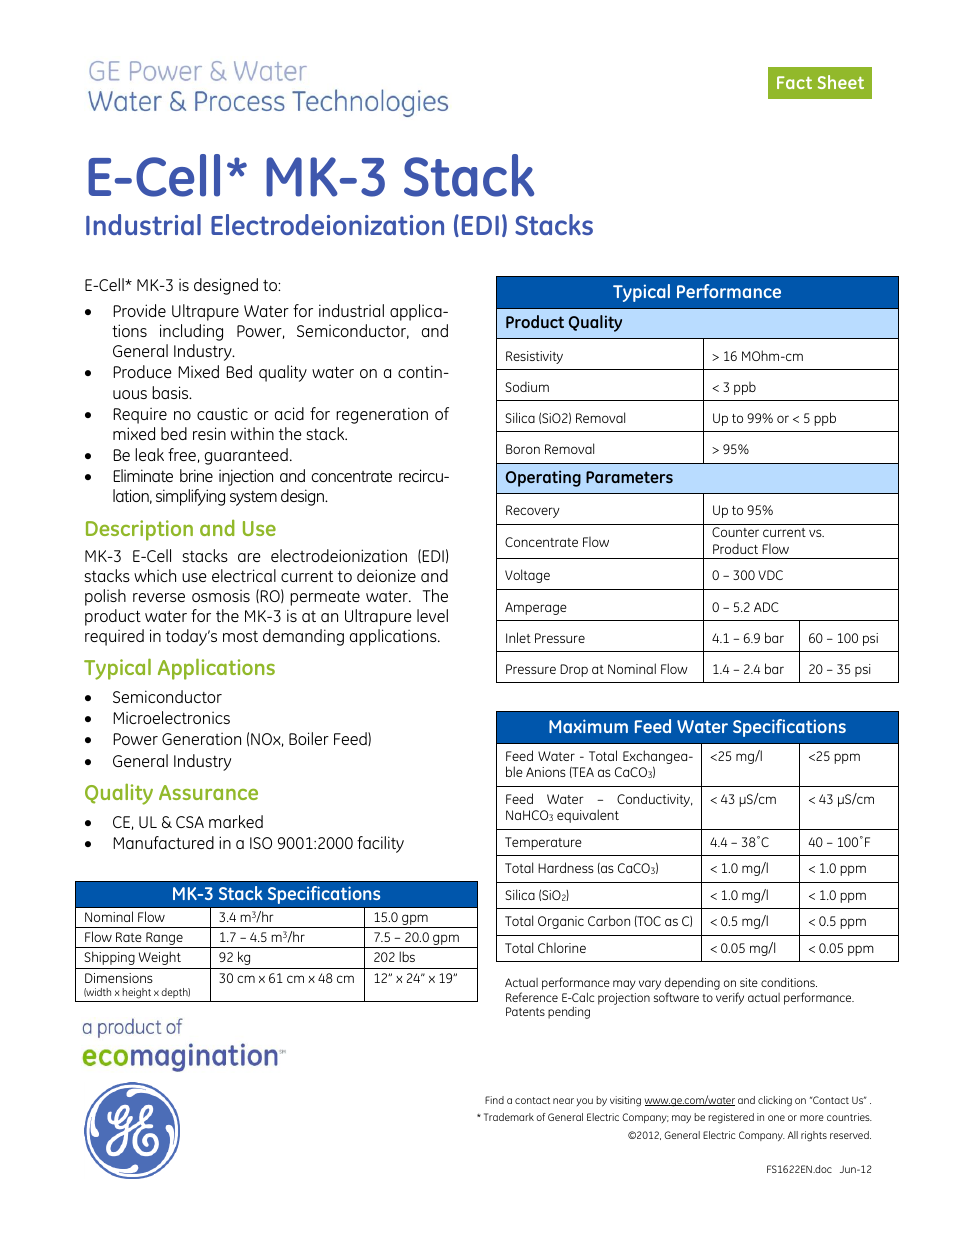 Electrodeionization (EDI) - E-Cell MK-3 Stack